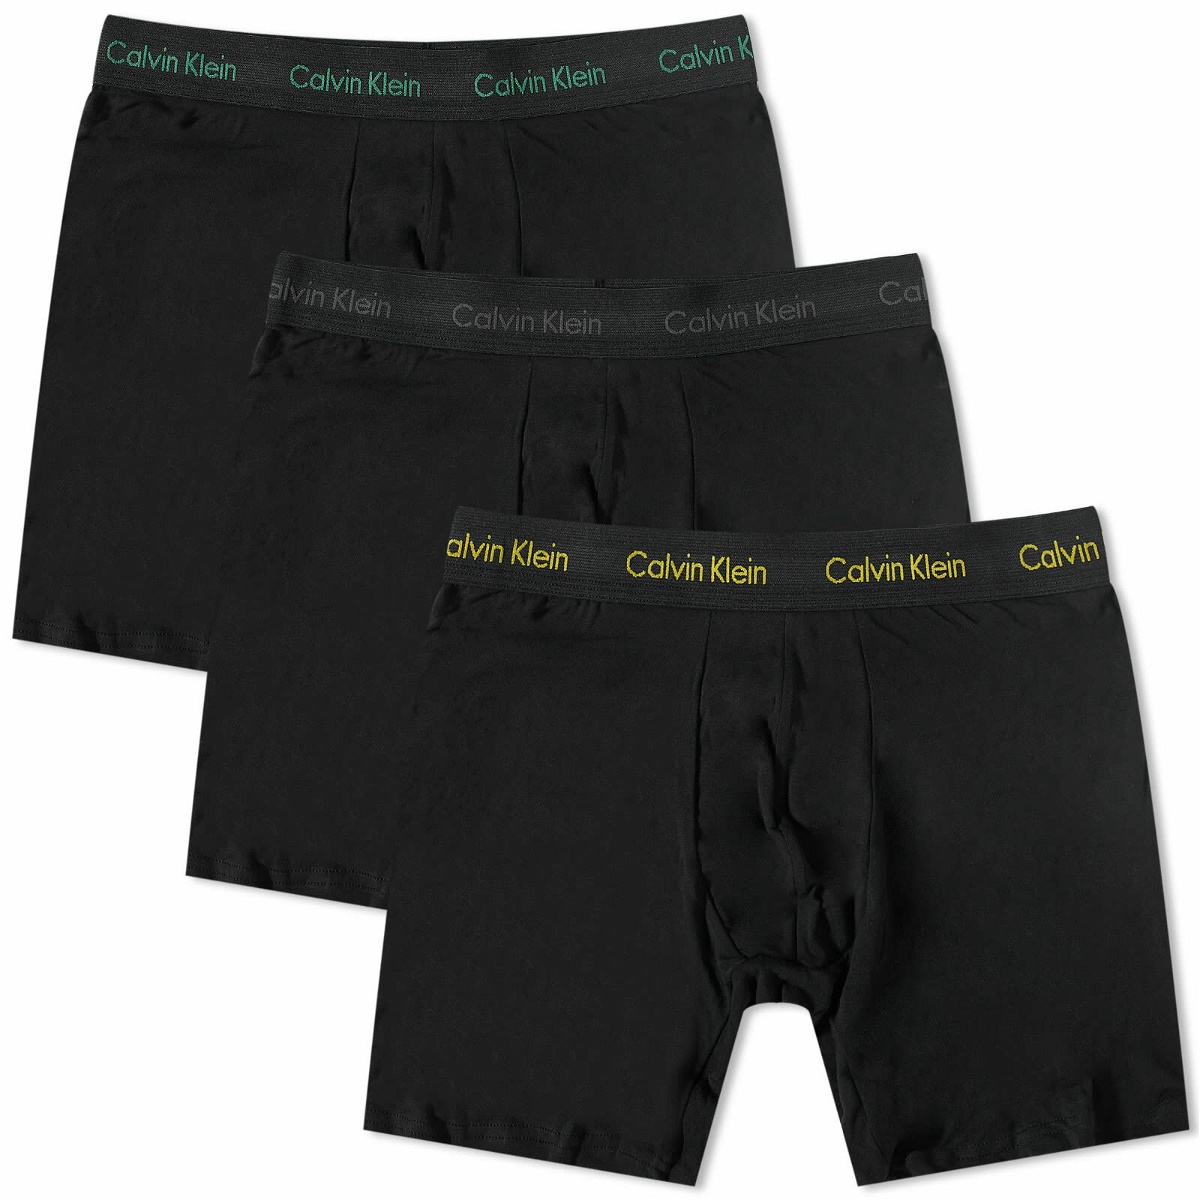 Calvin Klein Men's CK Underwear Low Rise Trunk - 3 Pack in Rhone/Charcoal/Orange  Calvin Klein